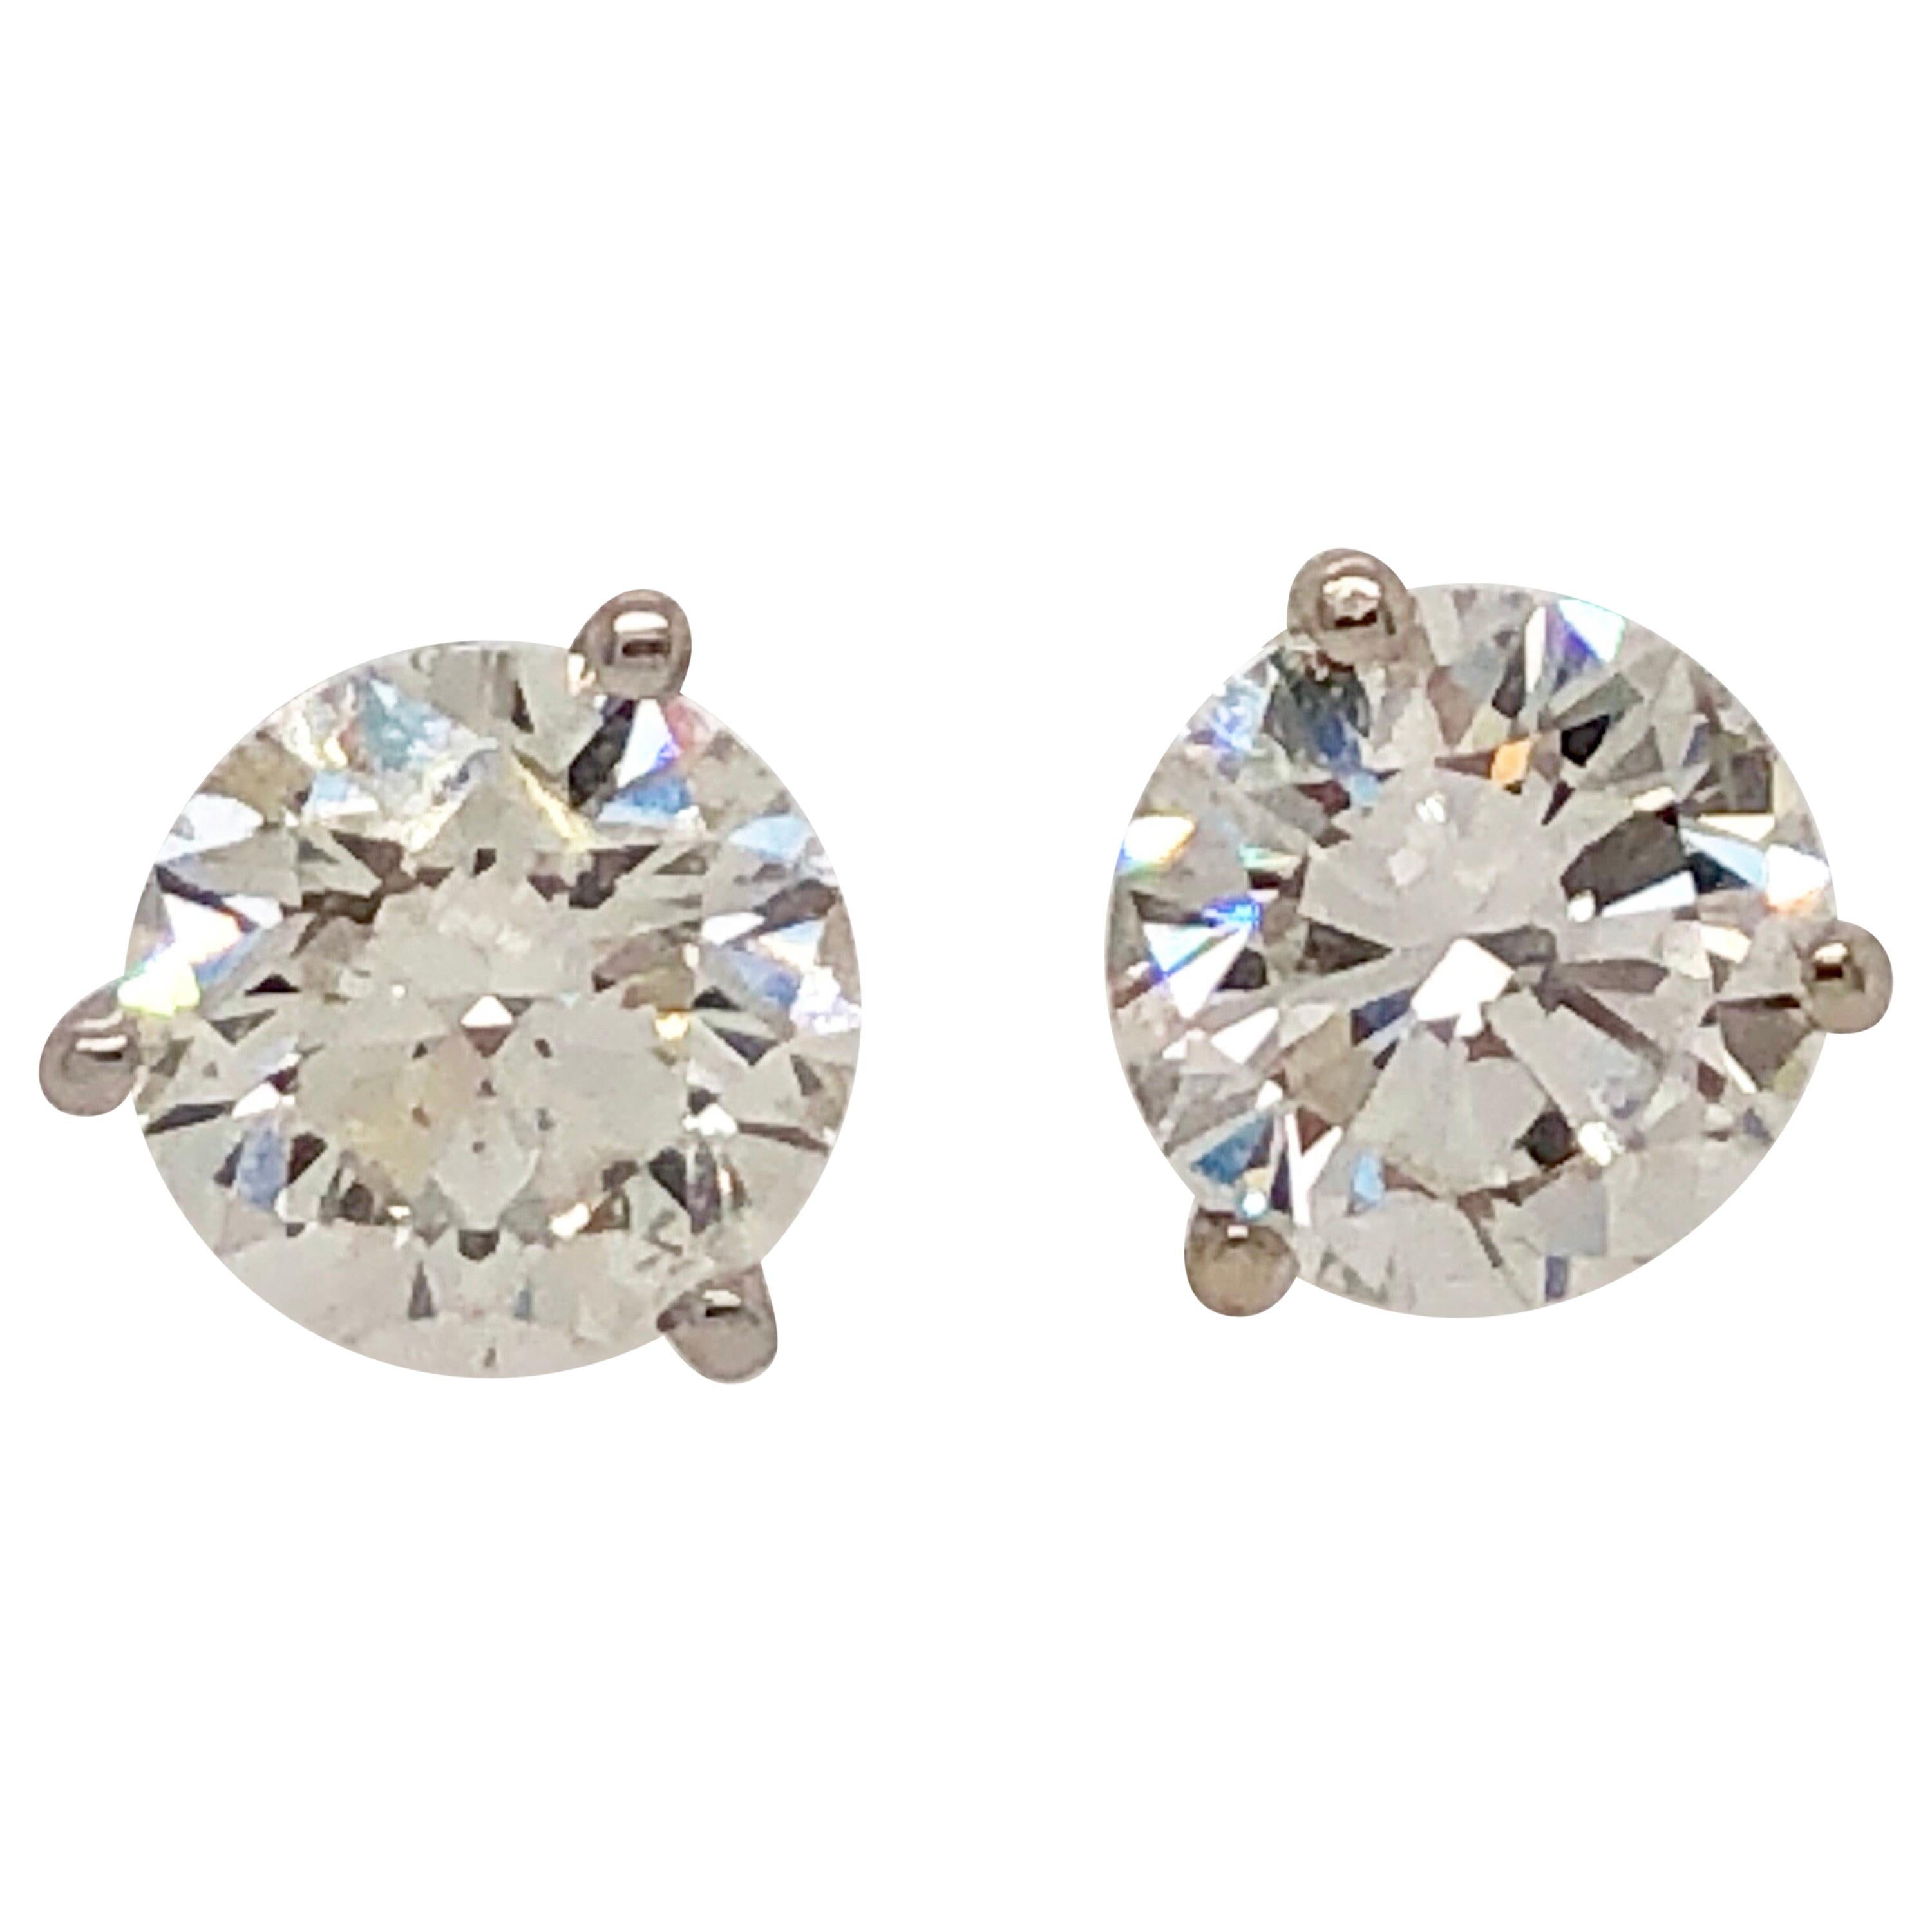 1.39 Carat Round Cut Diamond and White Gold Diamond Stud Earrings